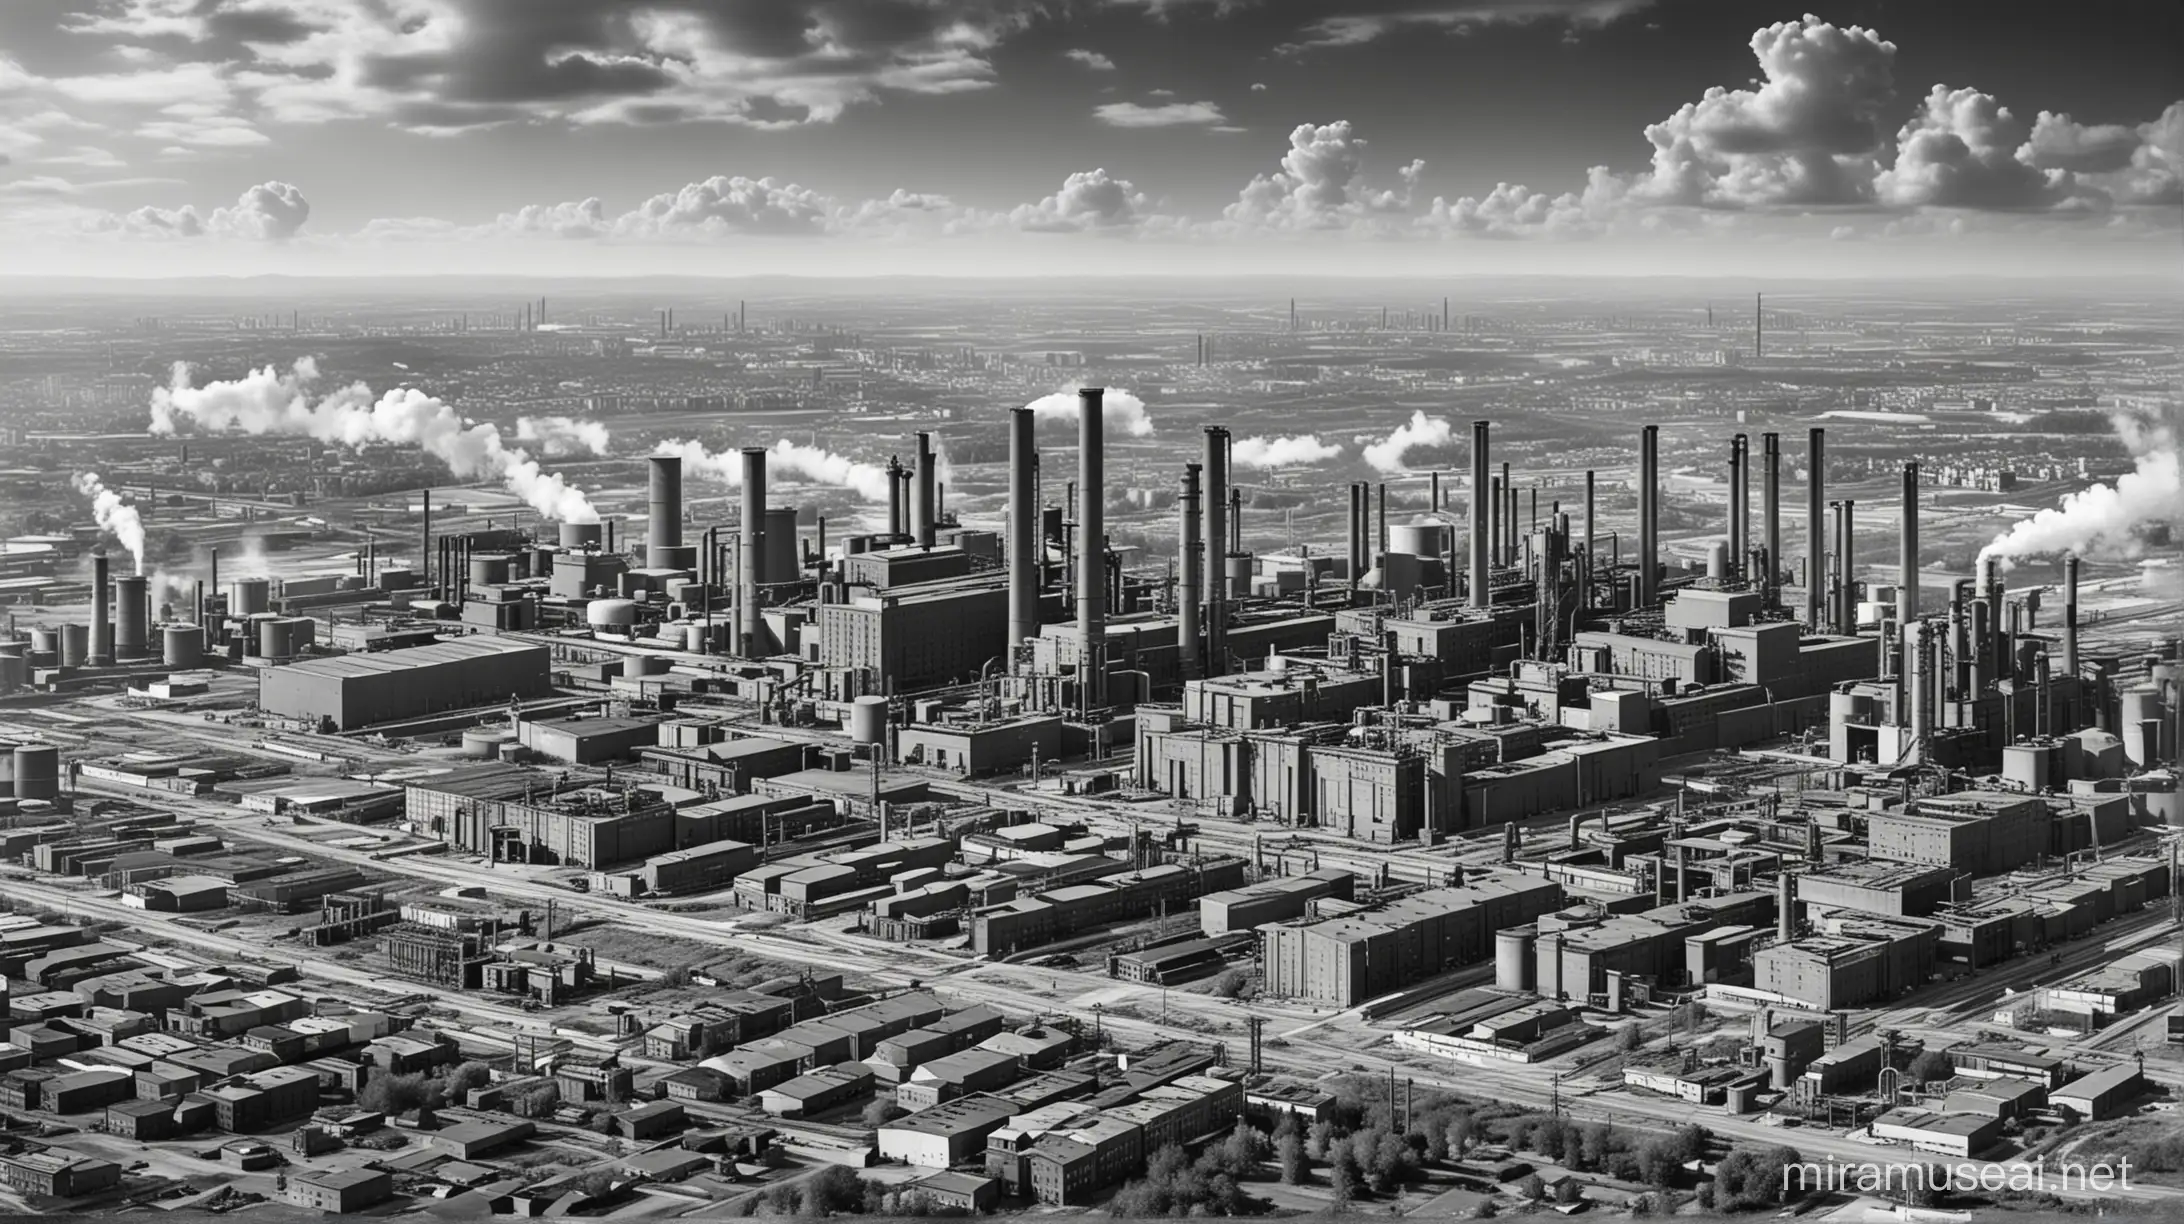 1920s Era Gigantic Industrial Factories in Monochrome